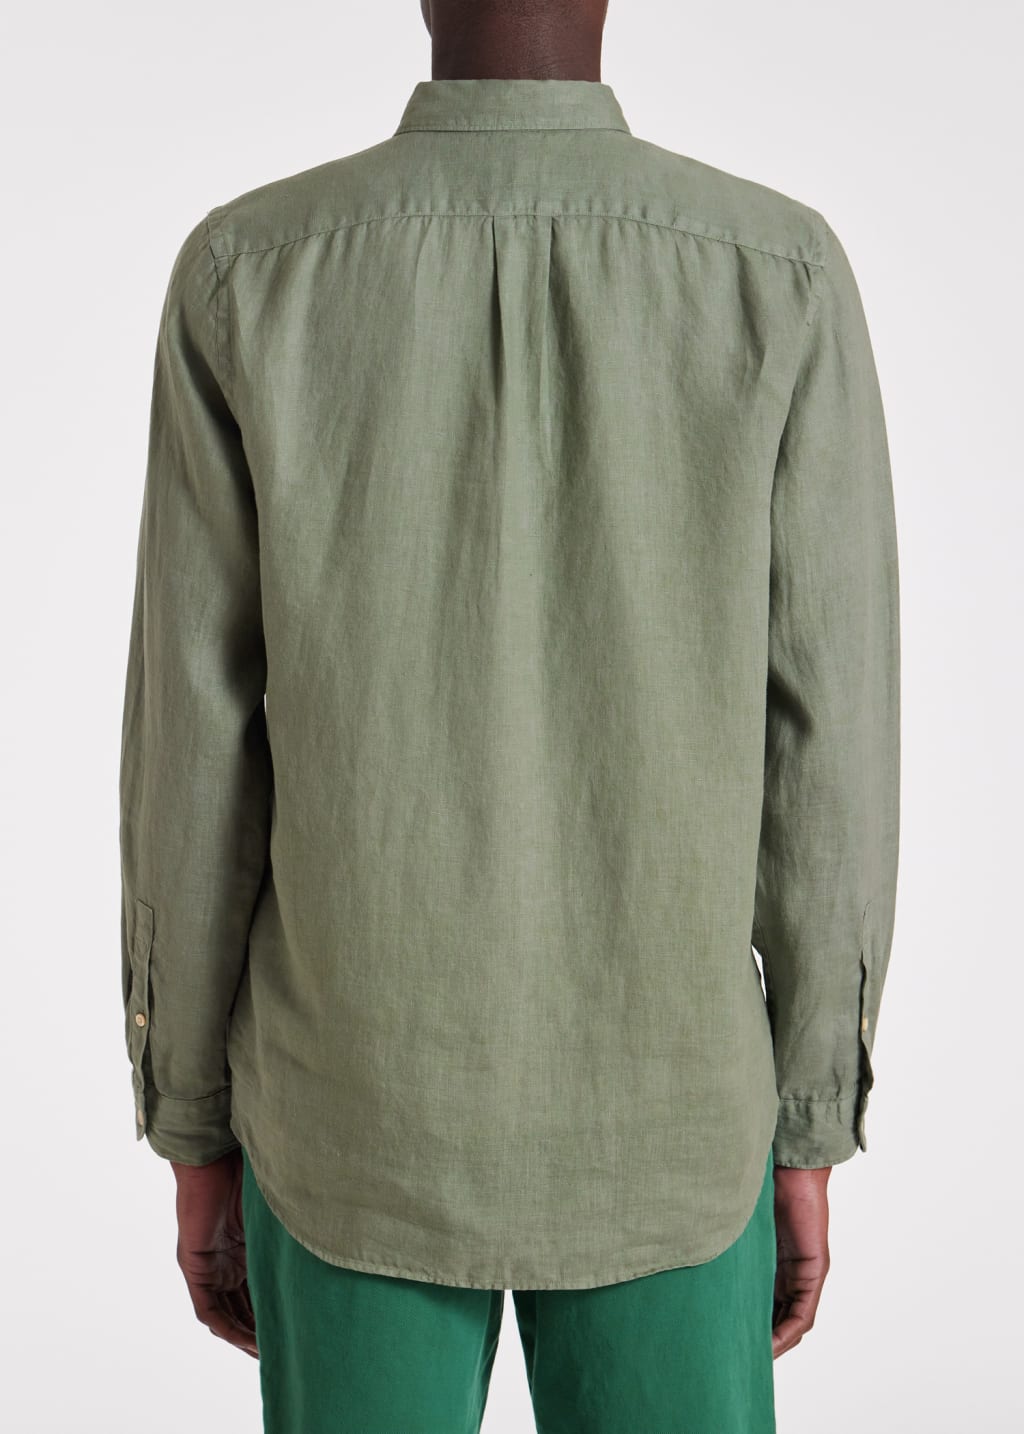 Model View - Green Linen Button-Down Shirt Paul Smith